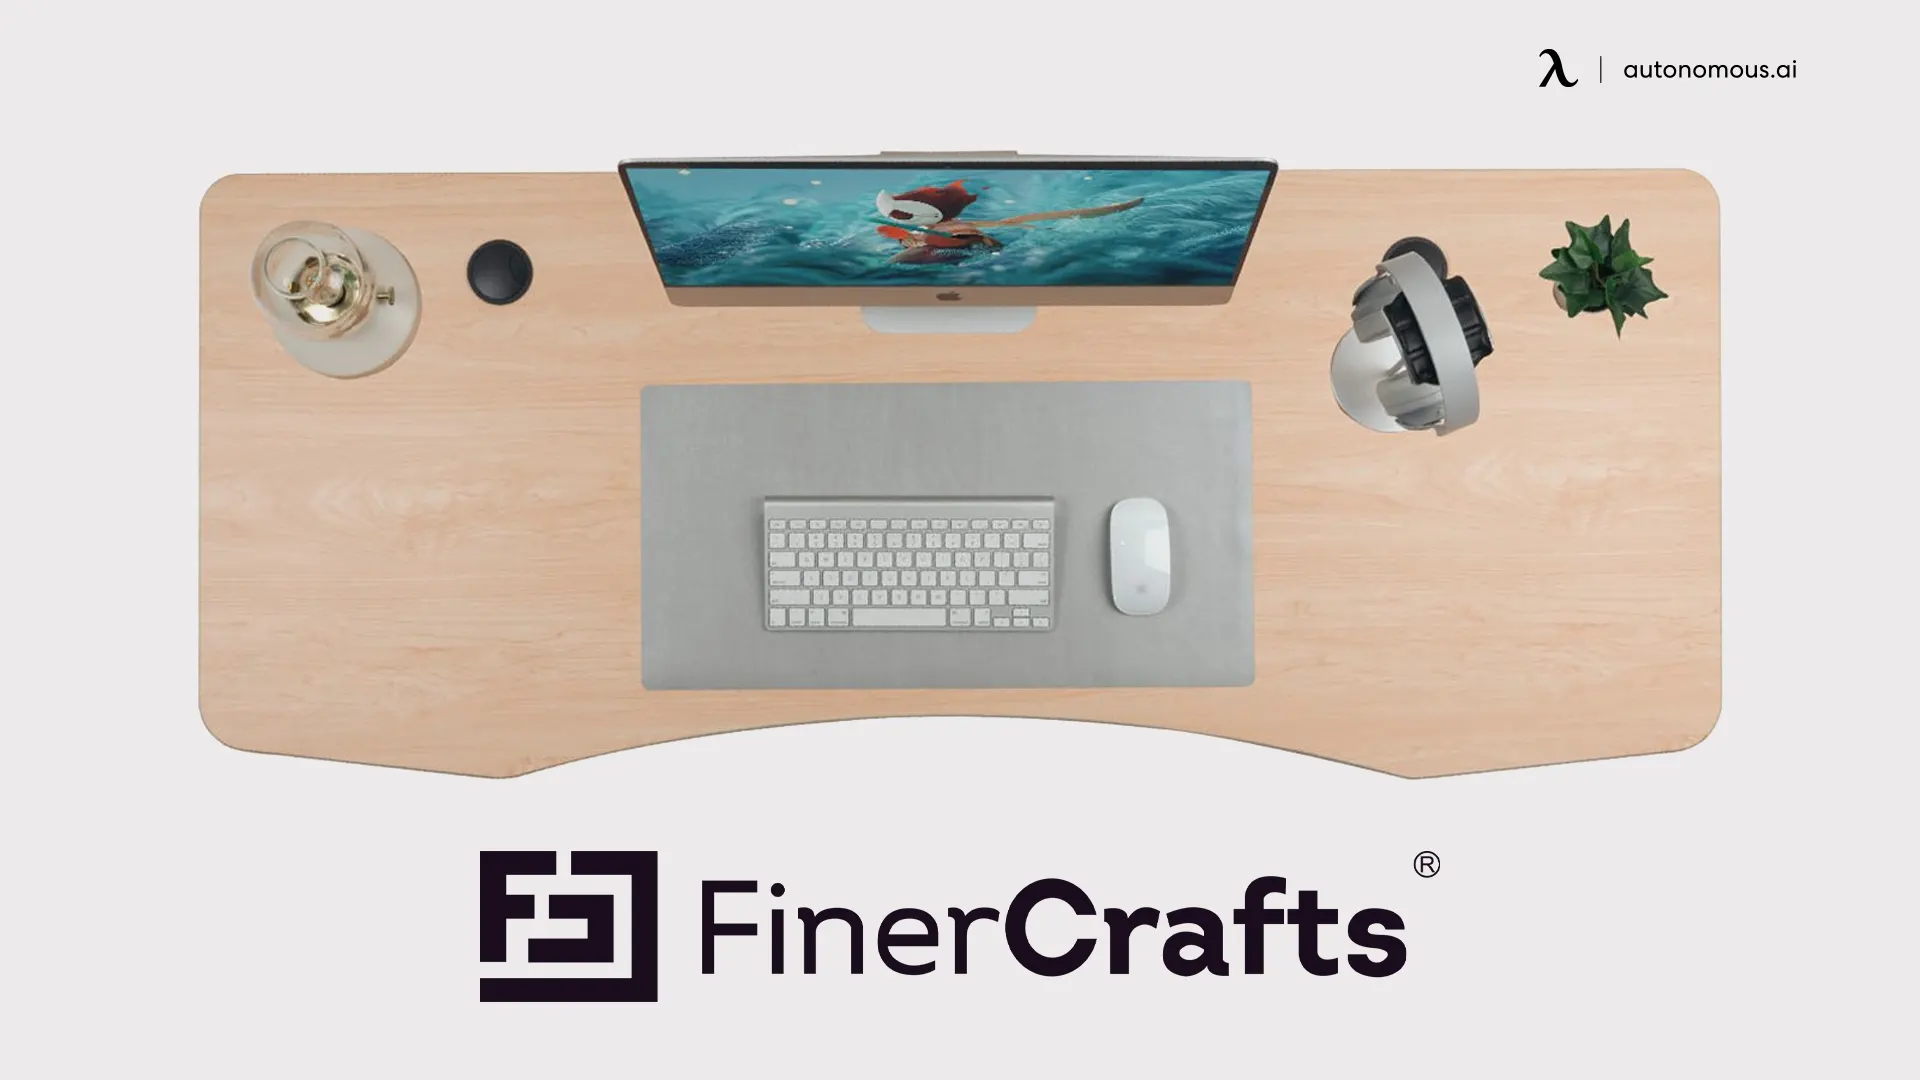 FinerCrafts - where to buy a desk